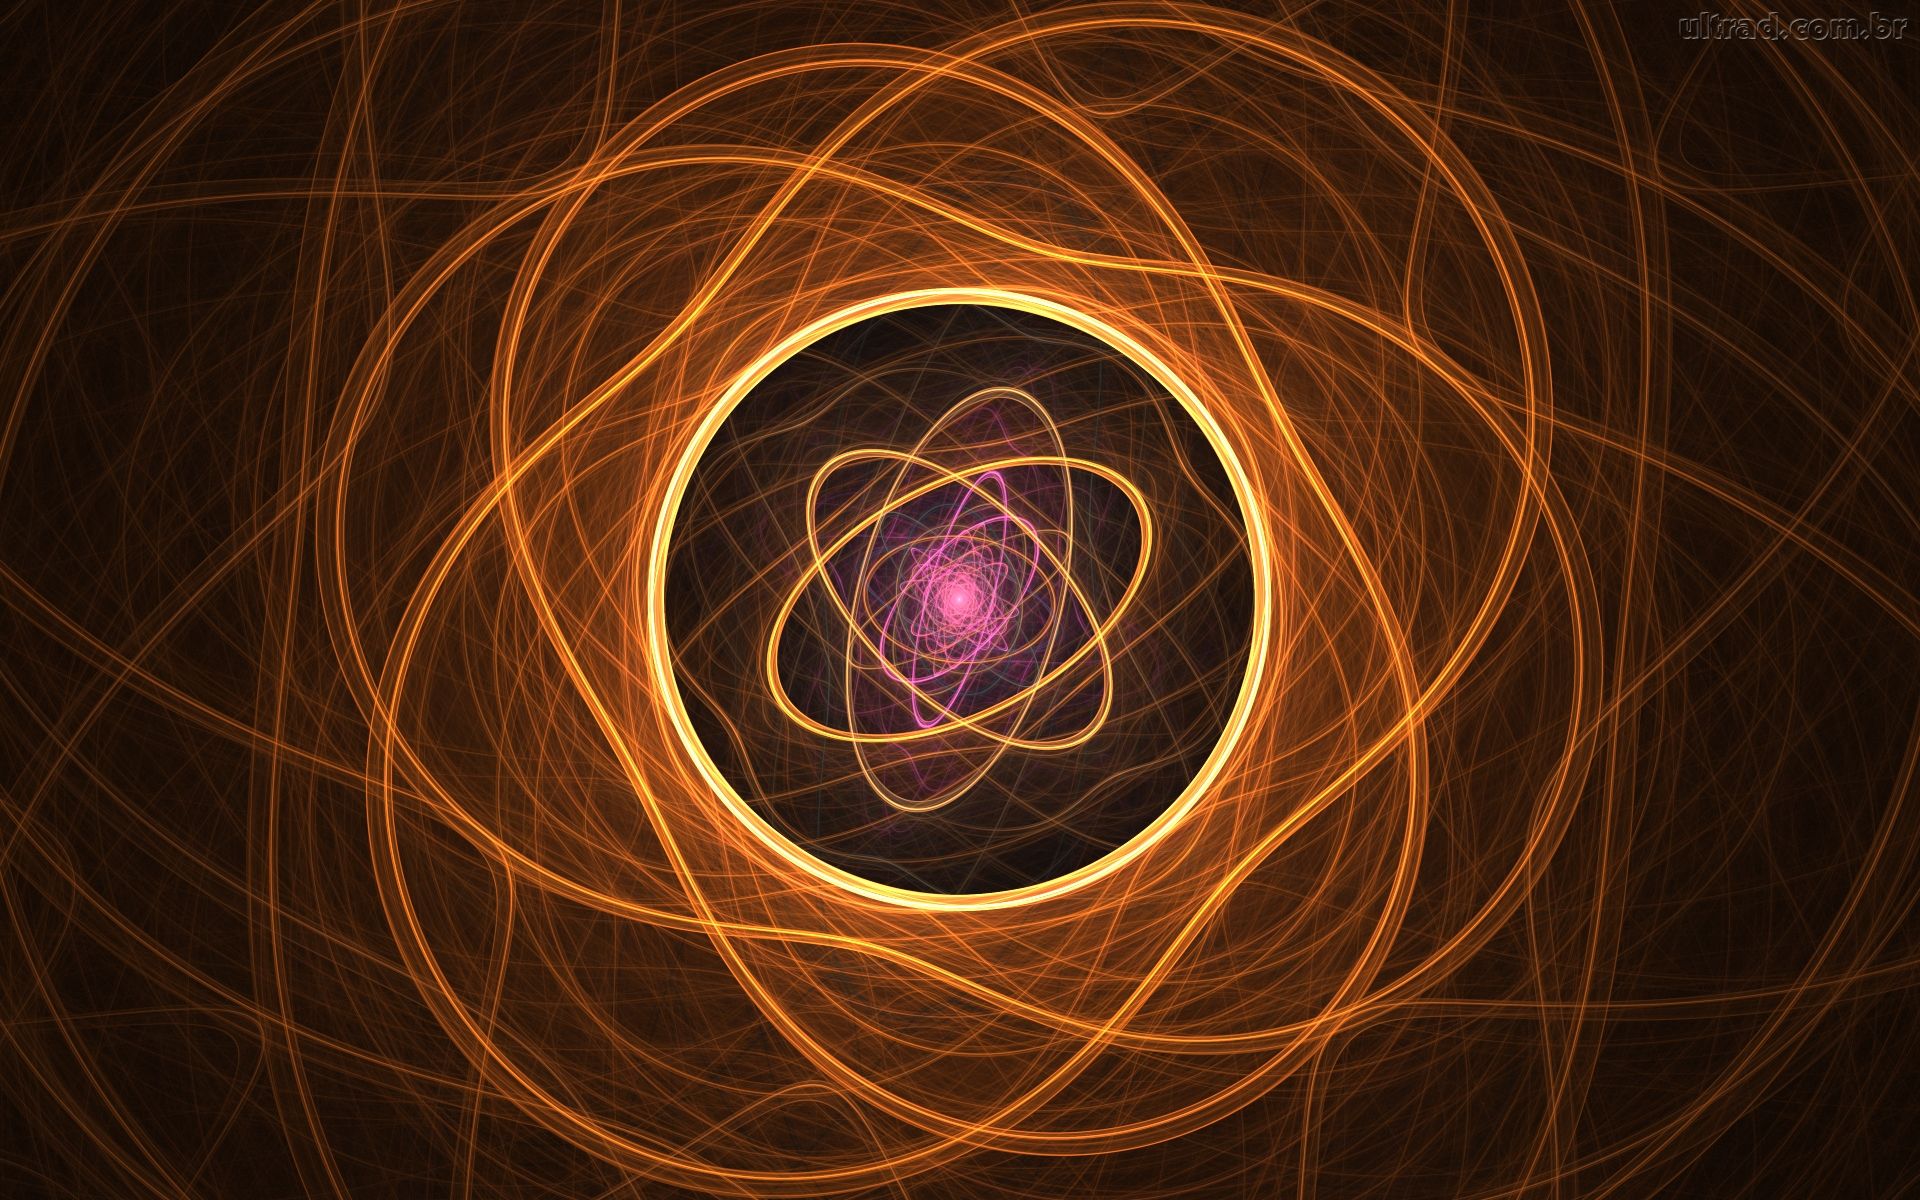 The Sound Of An Atom Has Been Captured - Imagens De Energia Quantica -  1920x1200 Wallpaper 